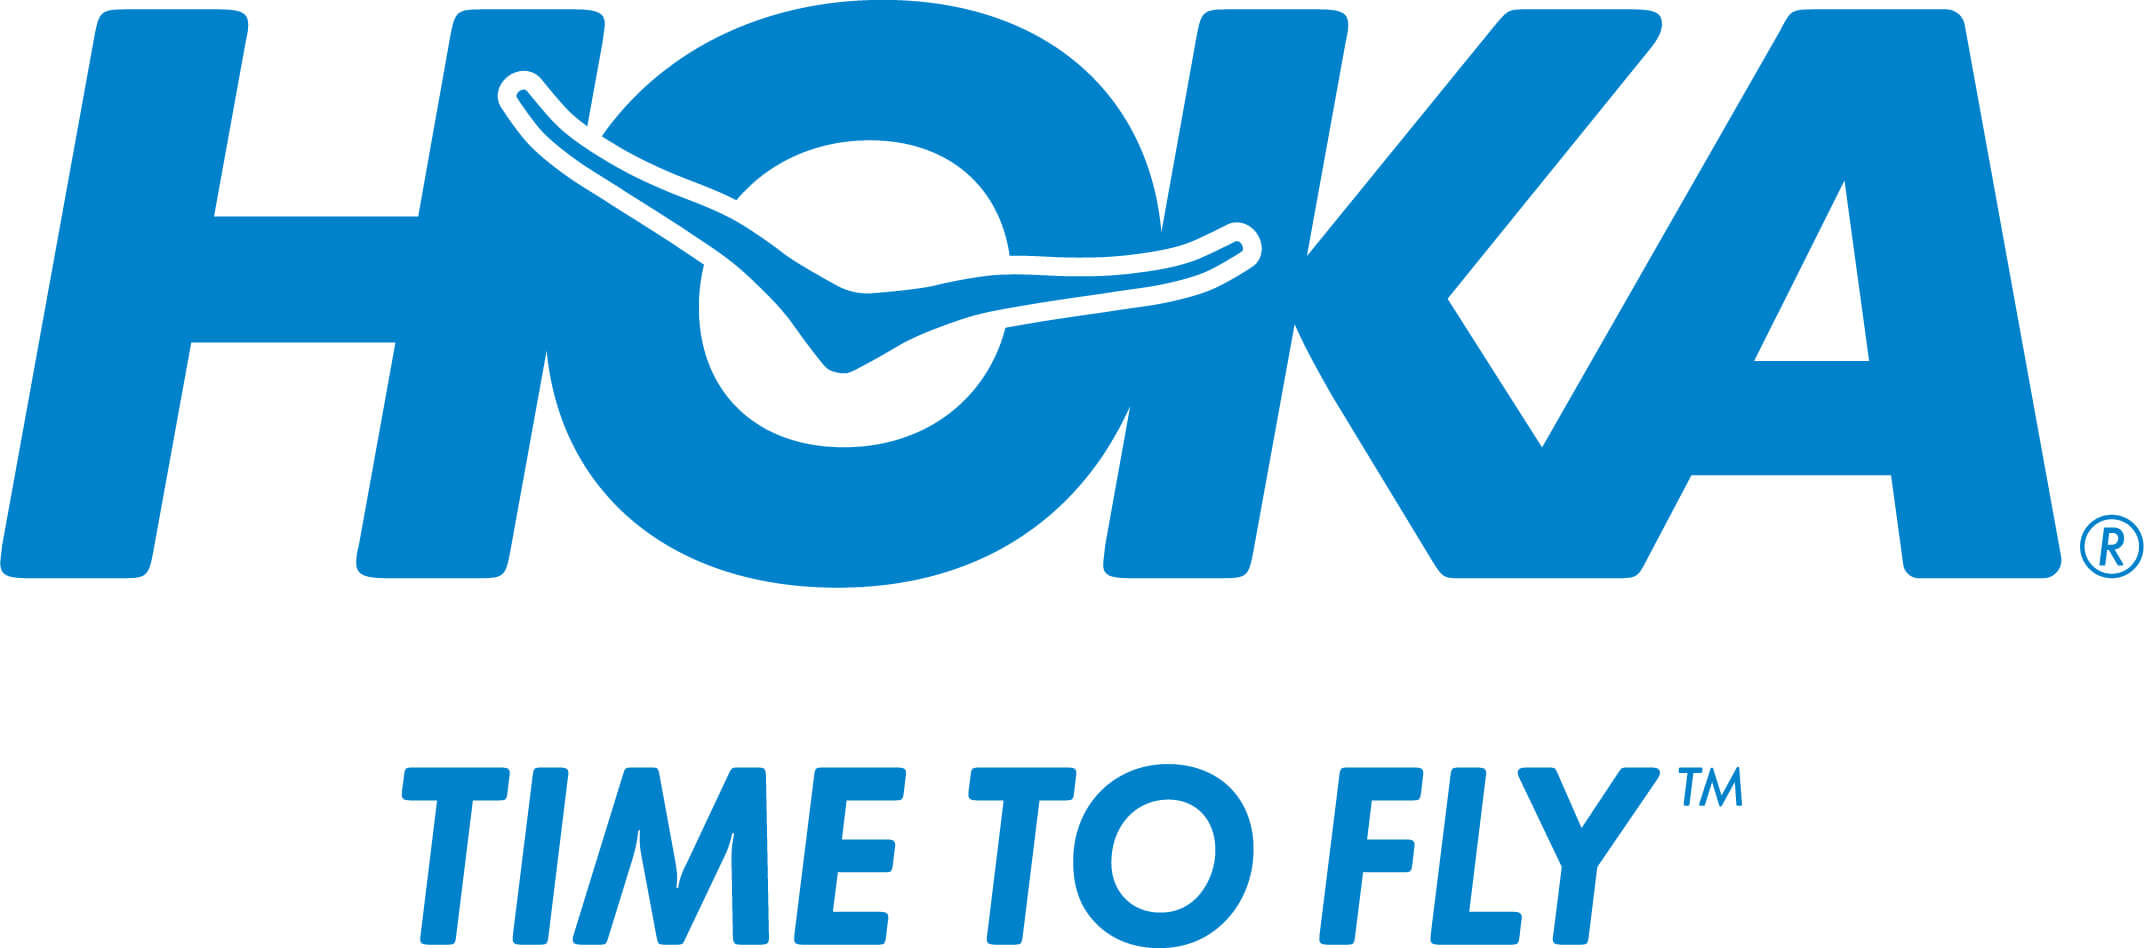 Hoka One One UK - Free Shipping & Returns